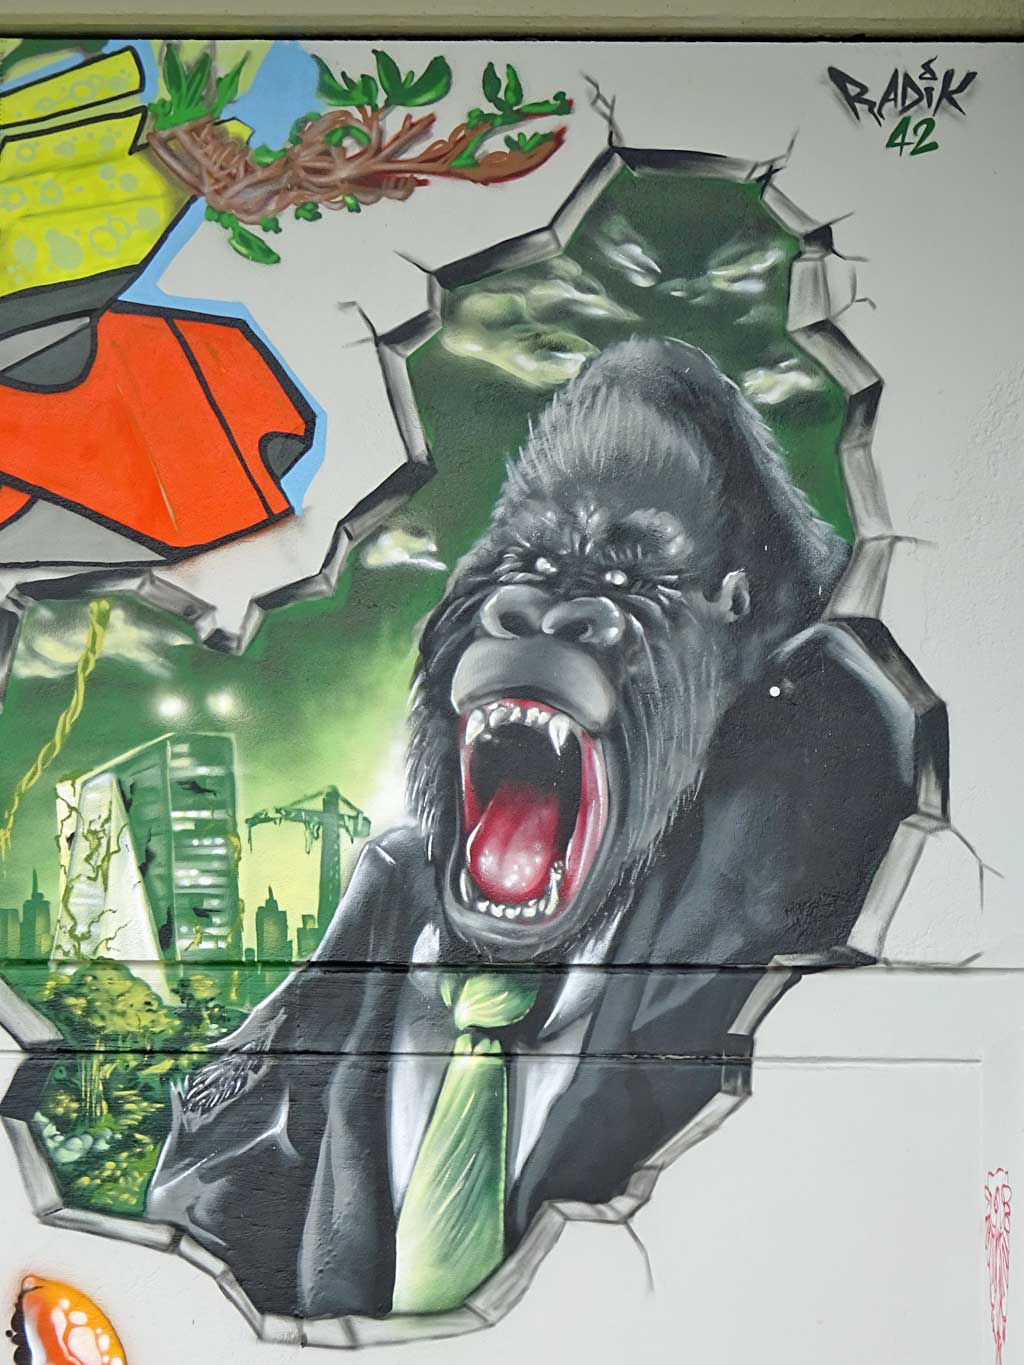 Großstadtdschungel-Graffiti am Niddapark in Frankfurt